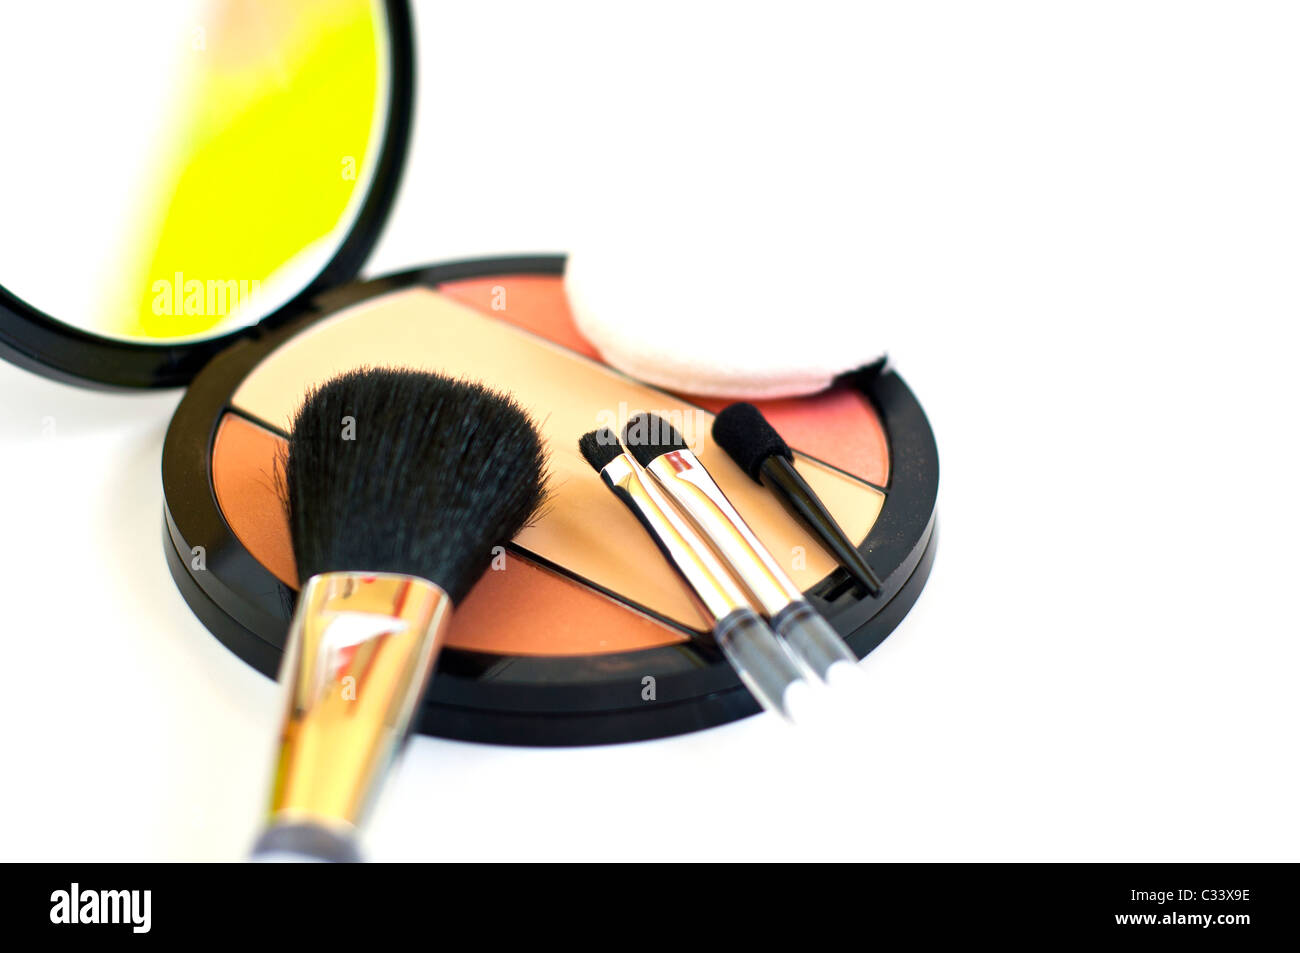 makeup brushes and blush on white background Stock Photo